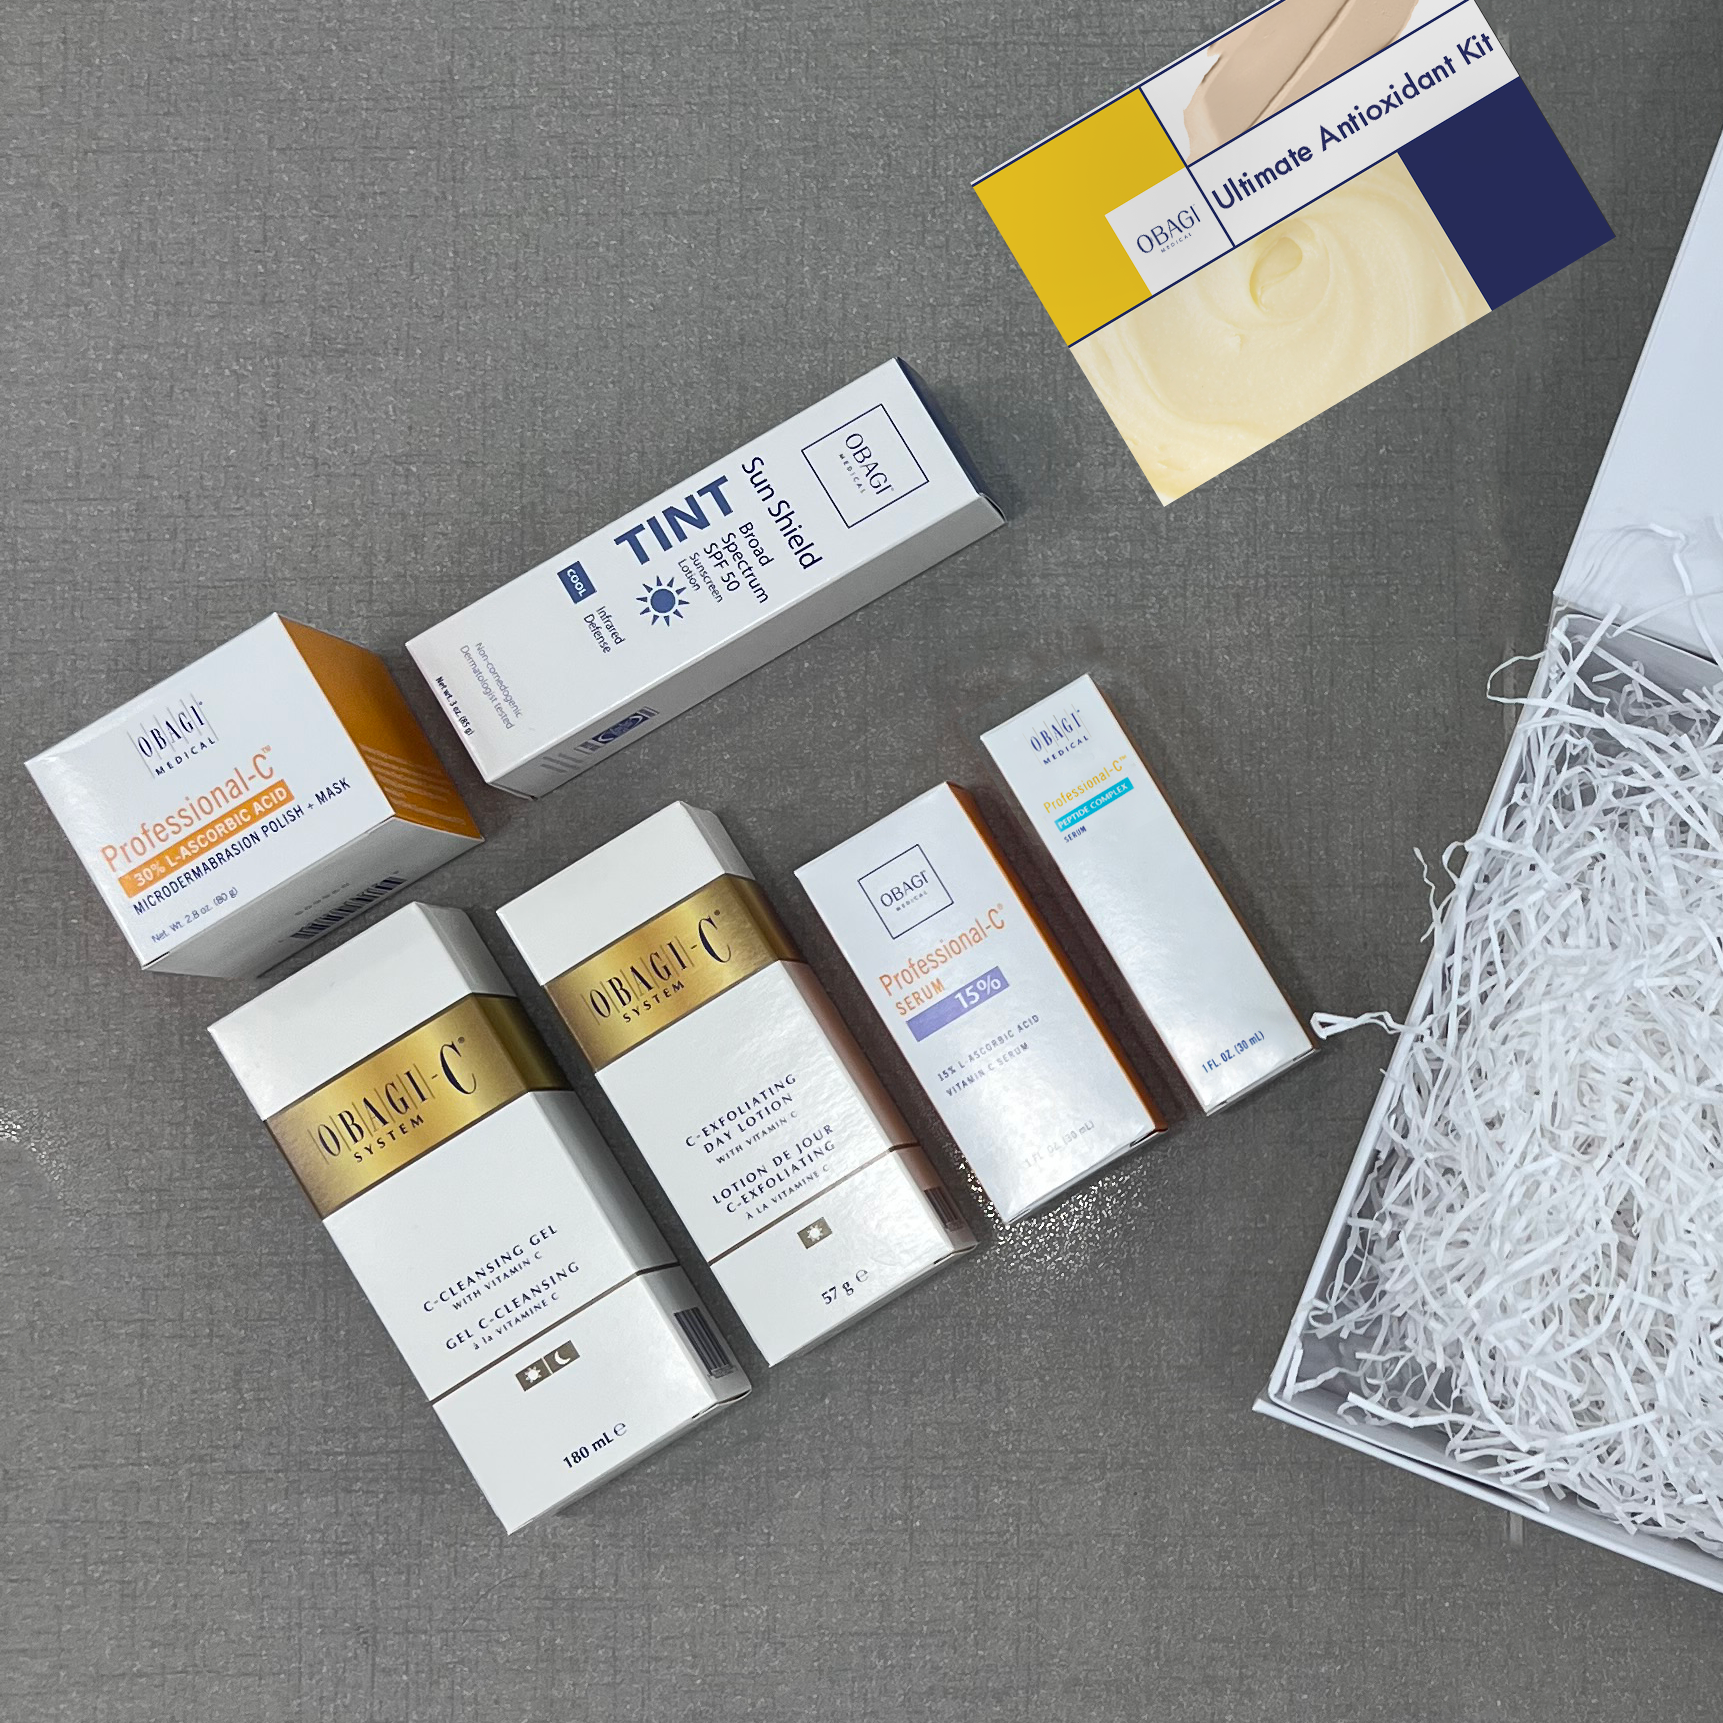 Obagi Ultimate Antioxidant Skincare Kit